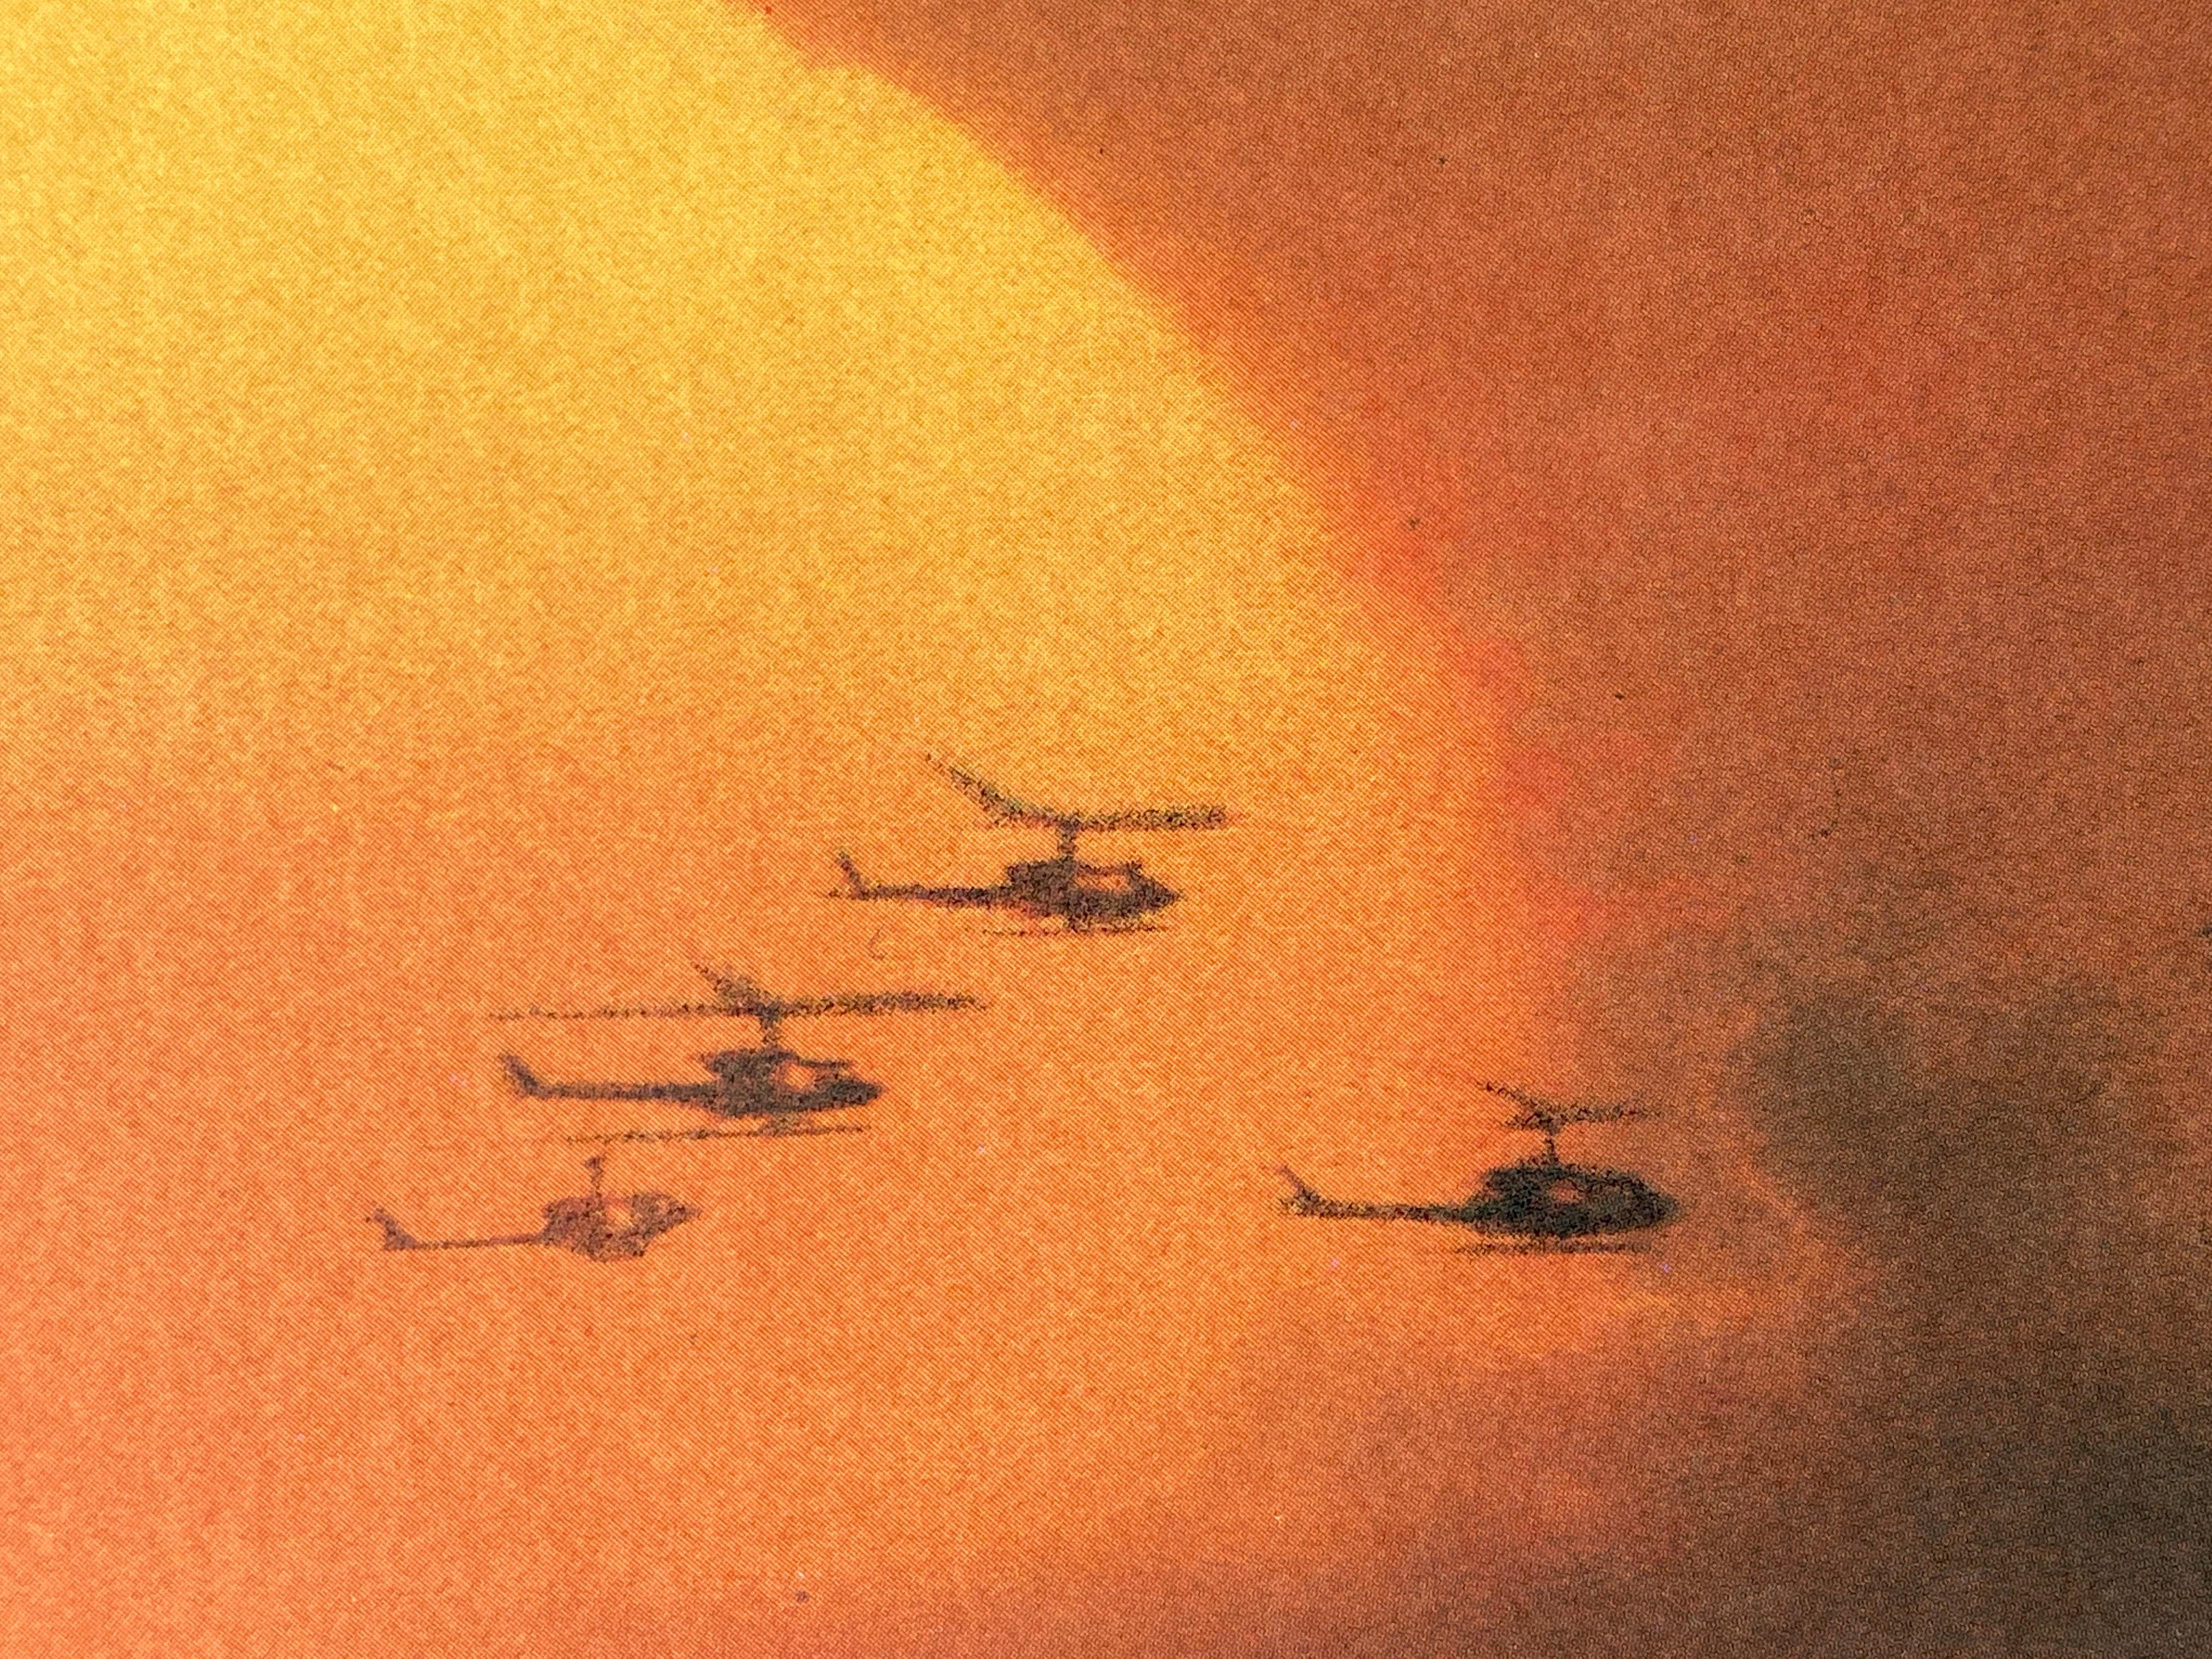 Paper 'Apocalypse Now' Original Vintage Japanese B2 Movie Poster, 1980